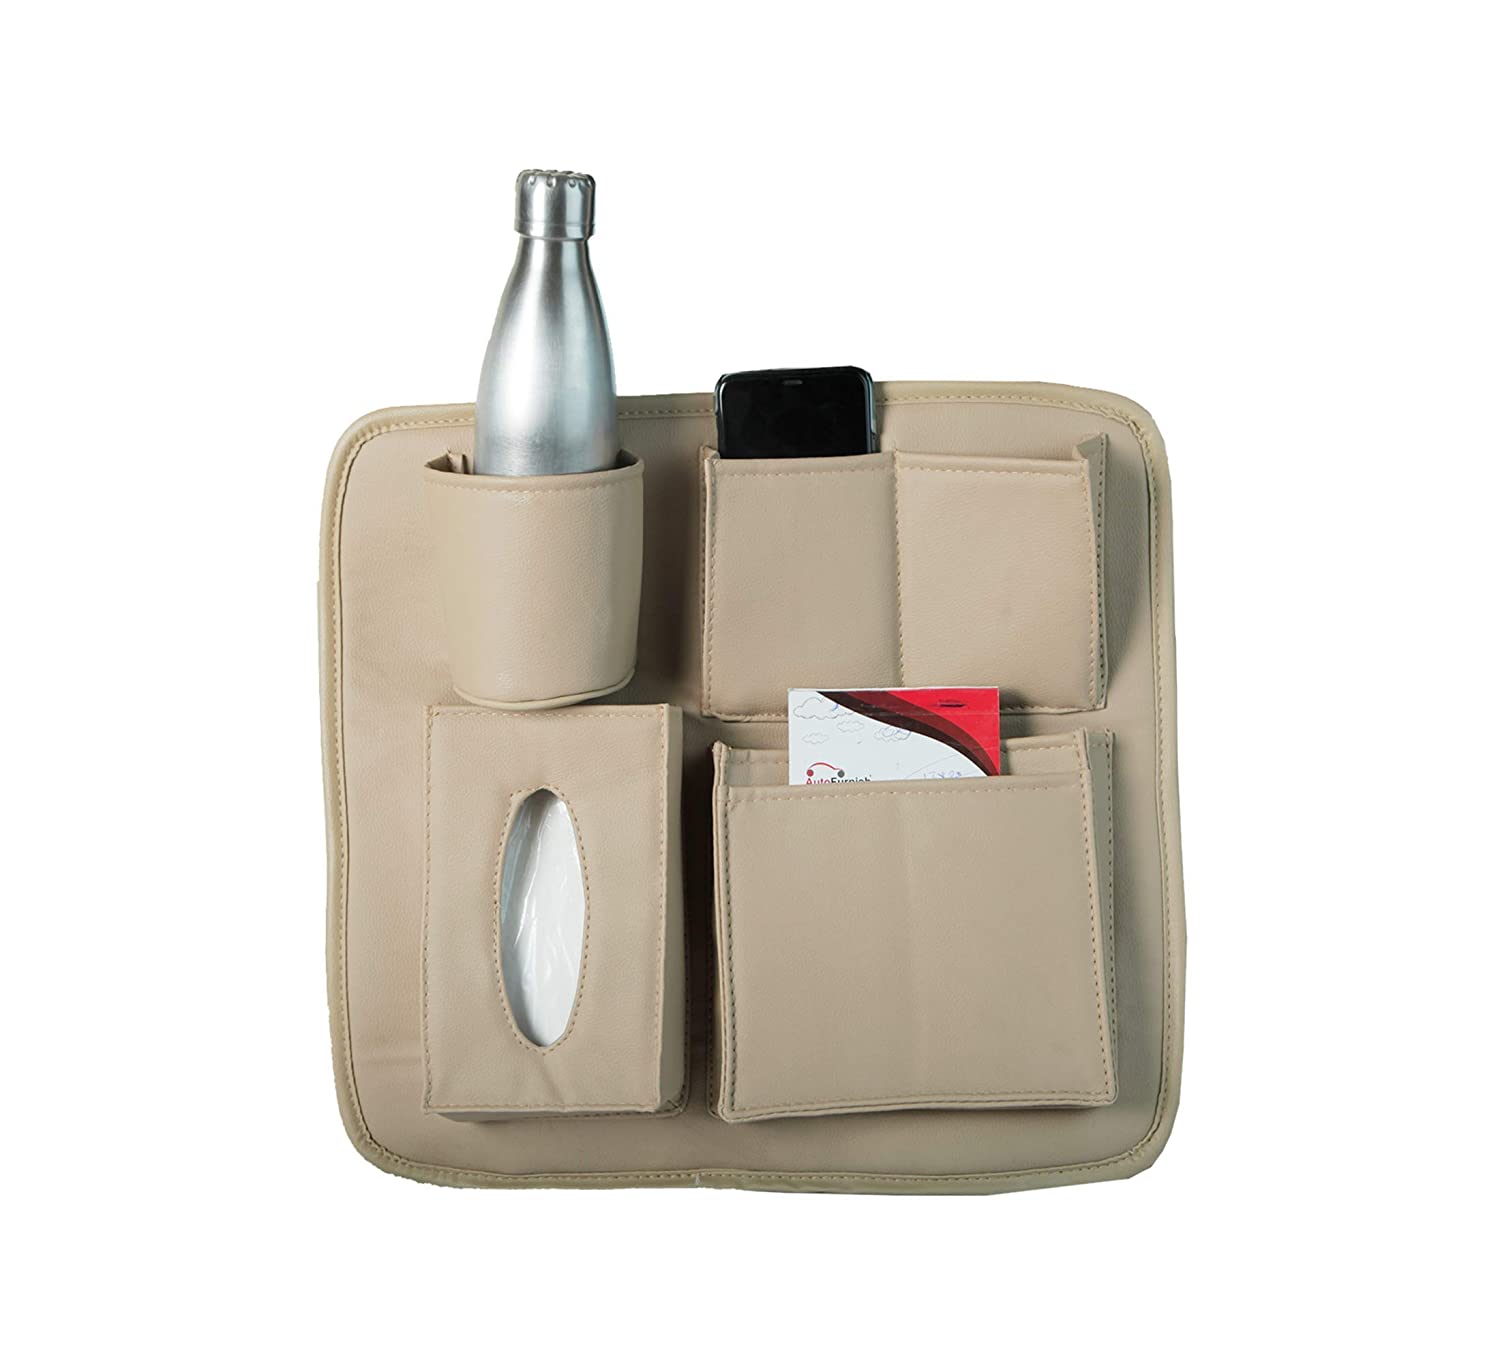 GO GO Gadget Pouch Insert ORGANIZE AND SWITCH | Gadget pouch, Pouch,  Evening handbag